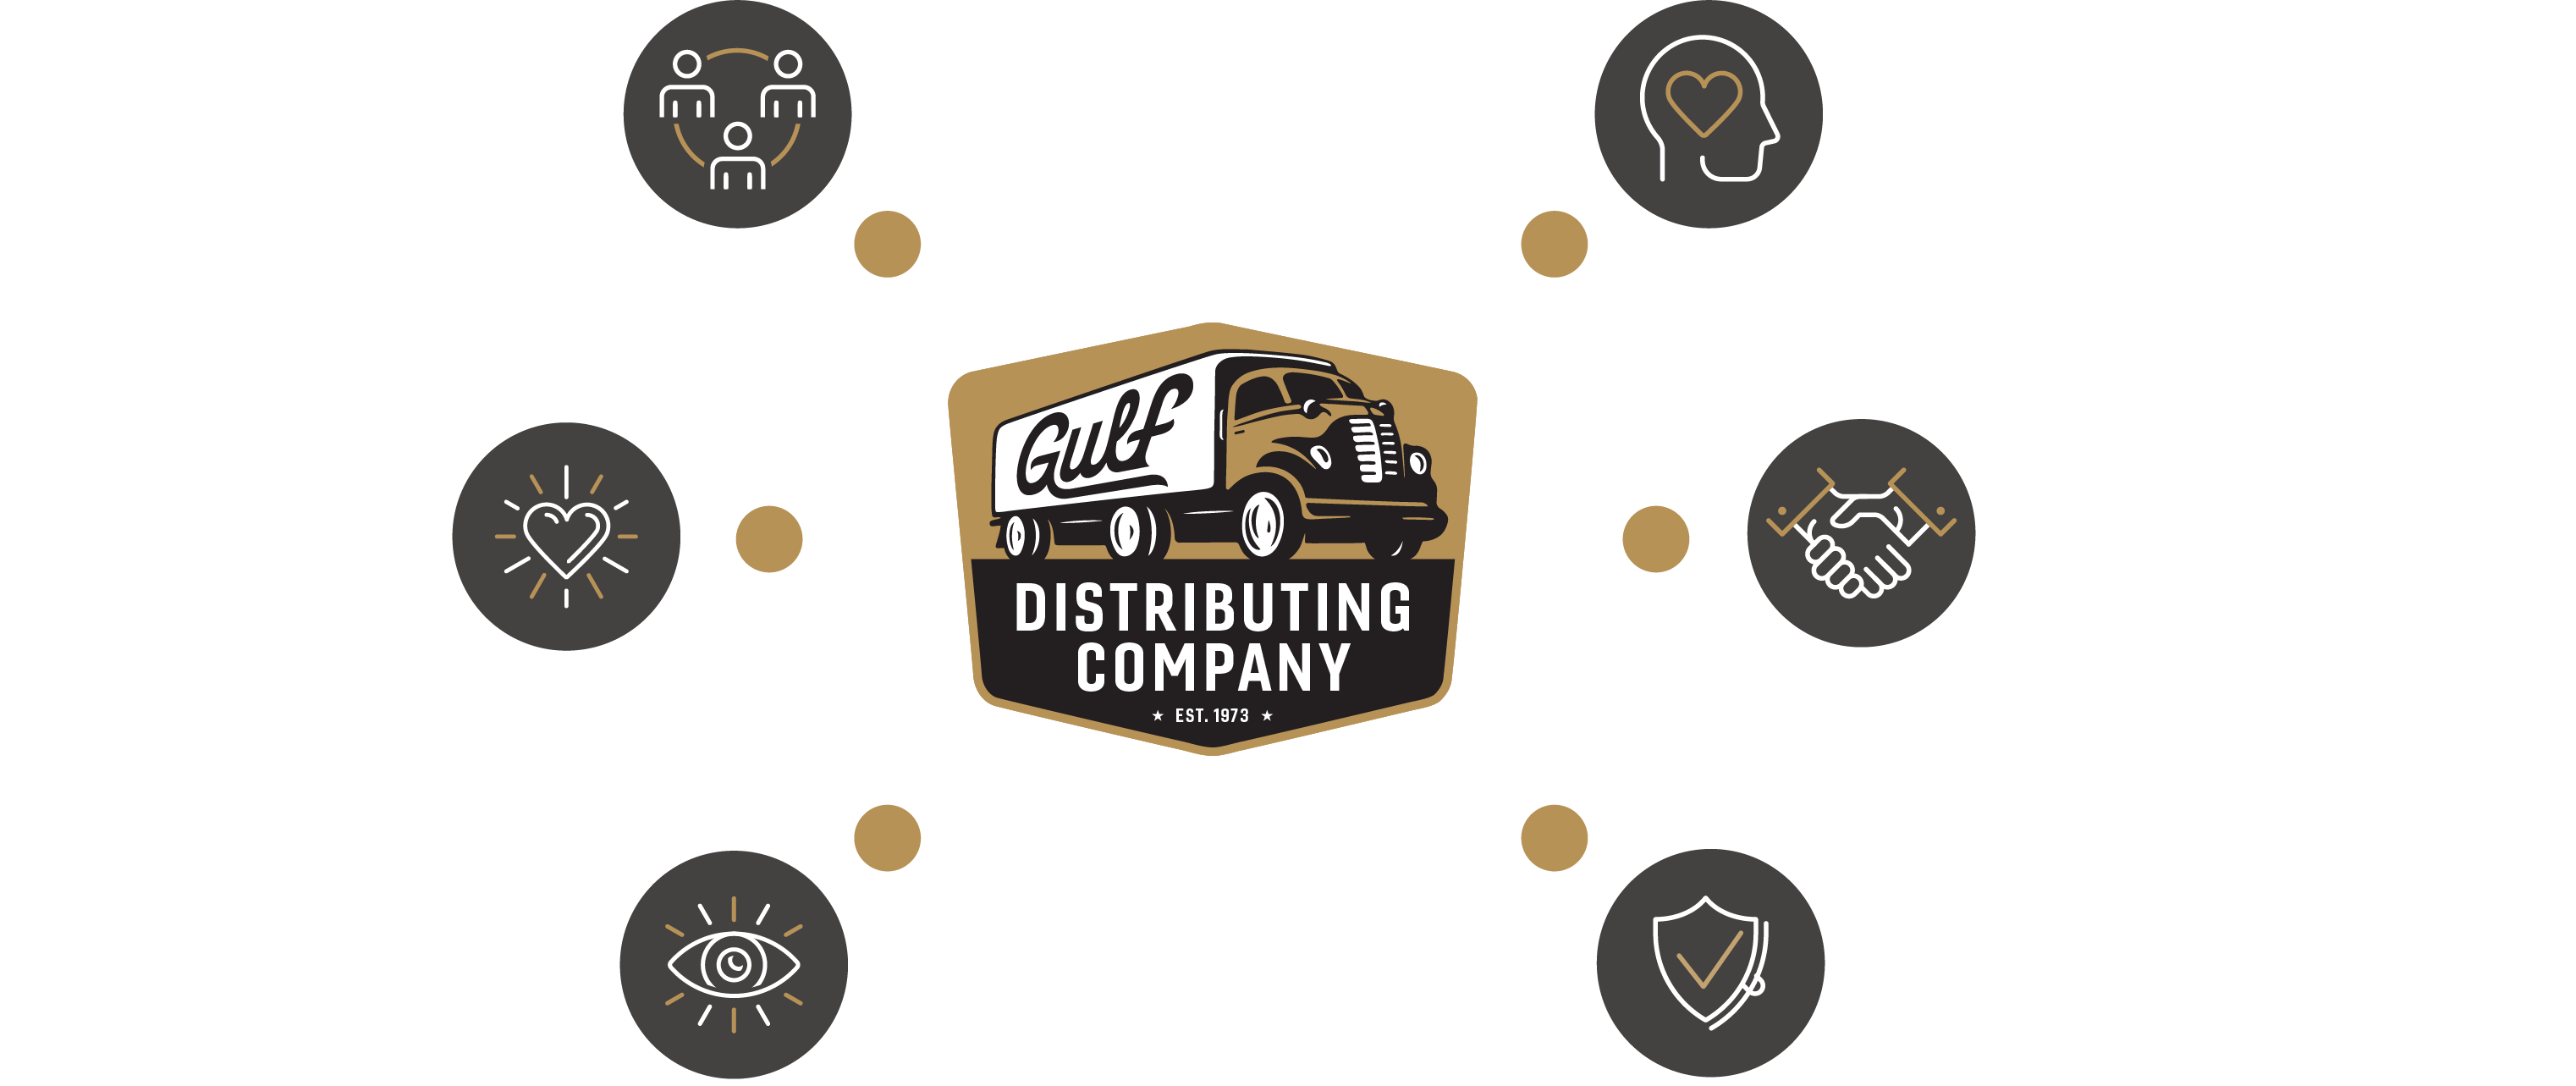 Gulf Distributing Company icons